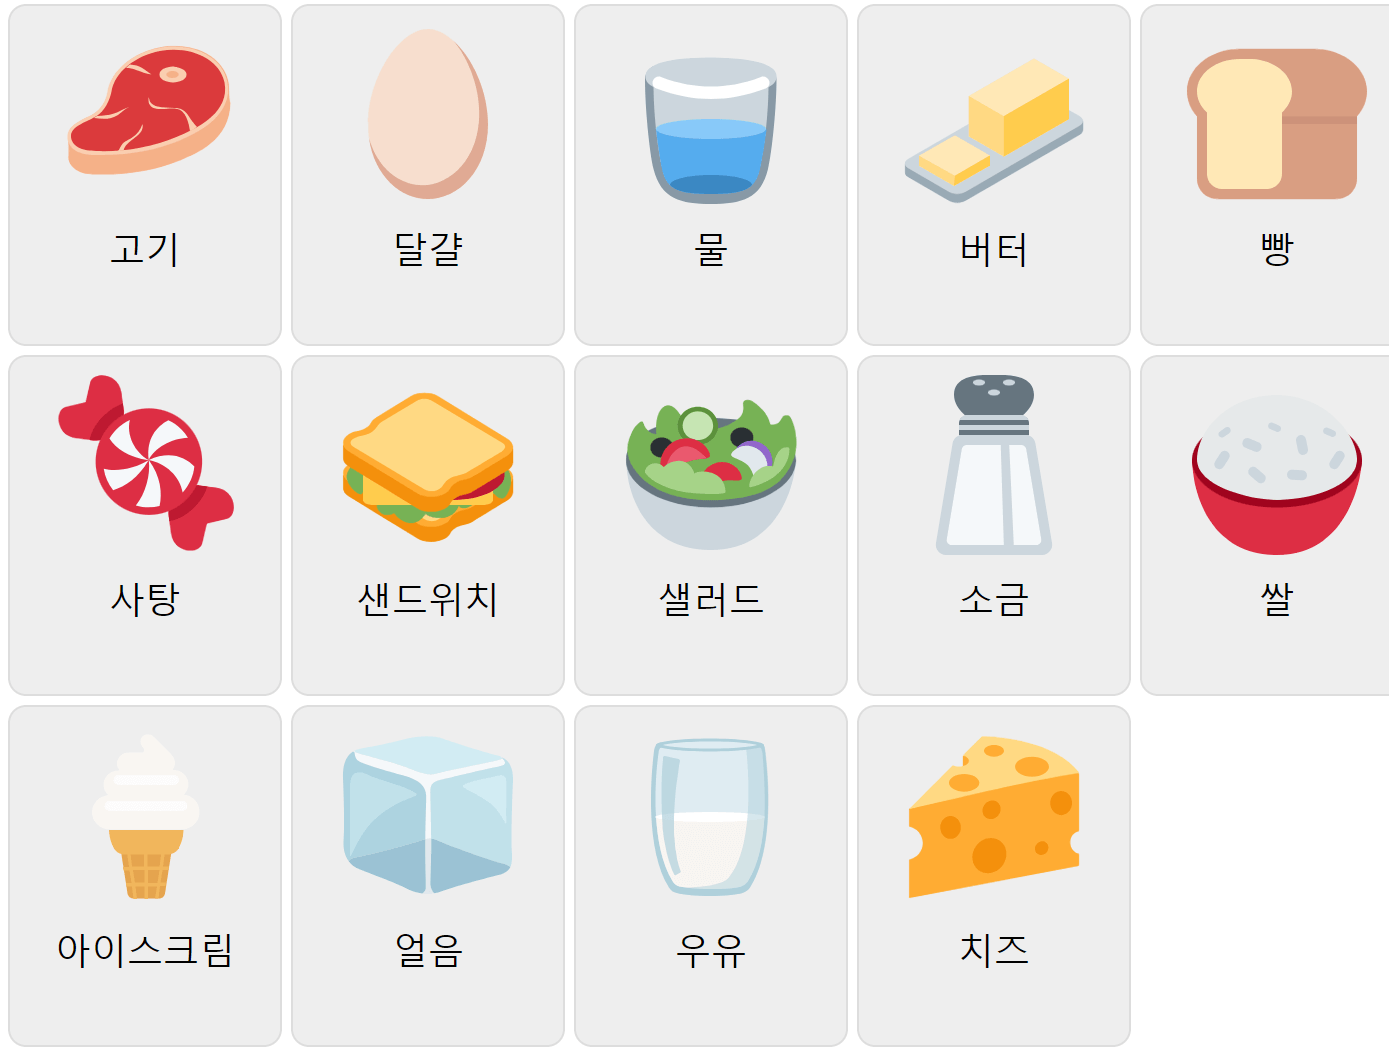 Еда на корейском языке 1